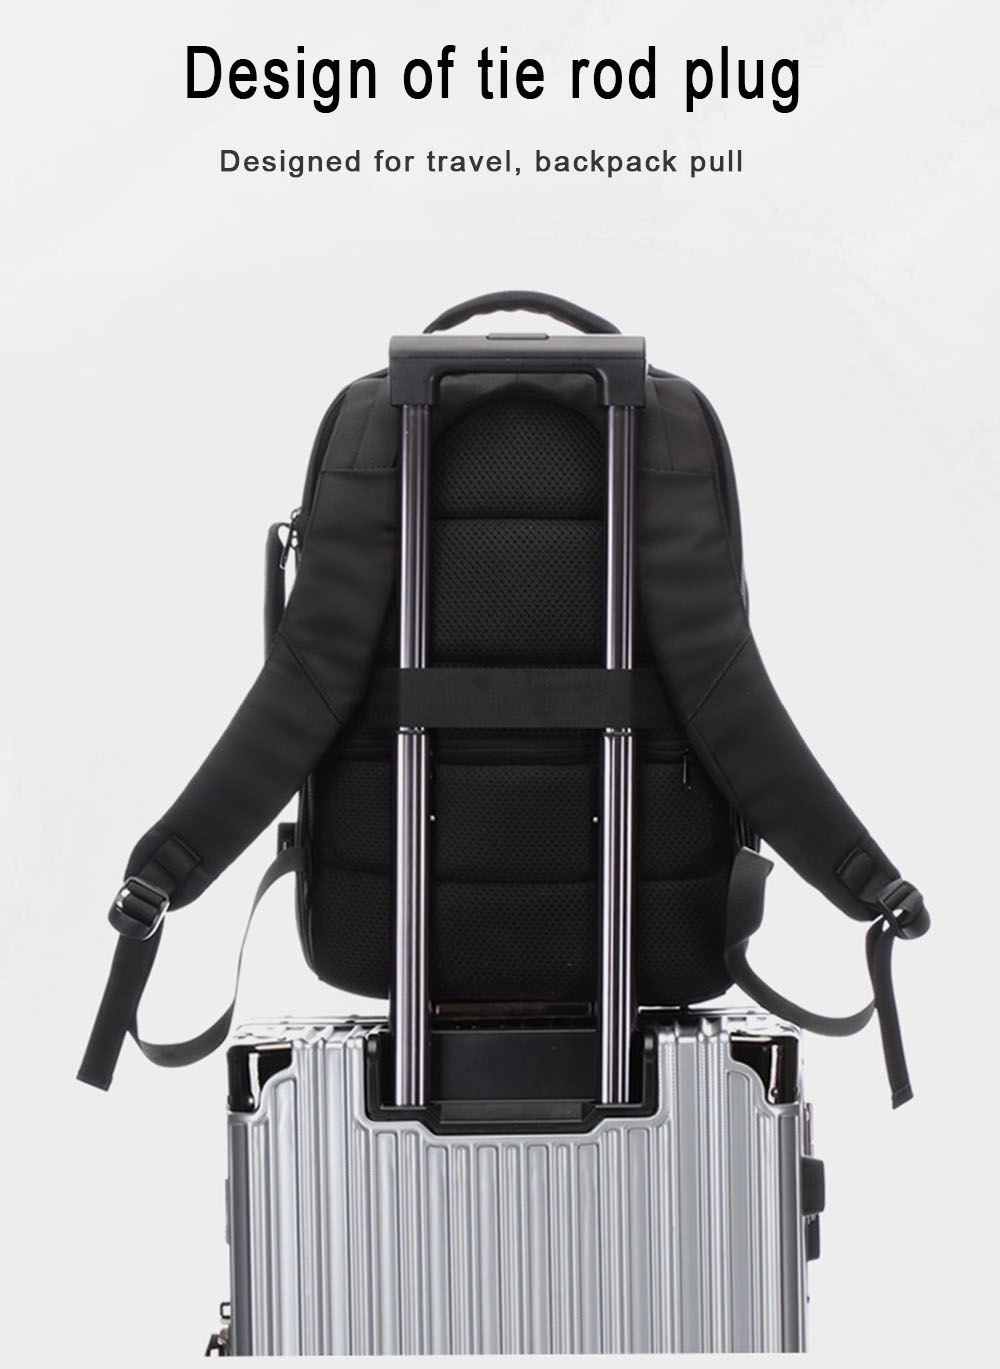 Business-Backpack-Laptop-Computer-Bag-Schoolbag-Shoulders-Storage-Bag-Waterproof-with-USB-Headset-In-1725869